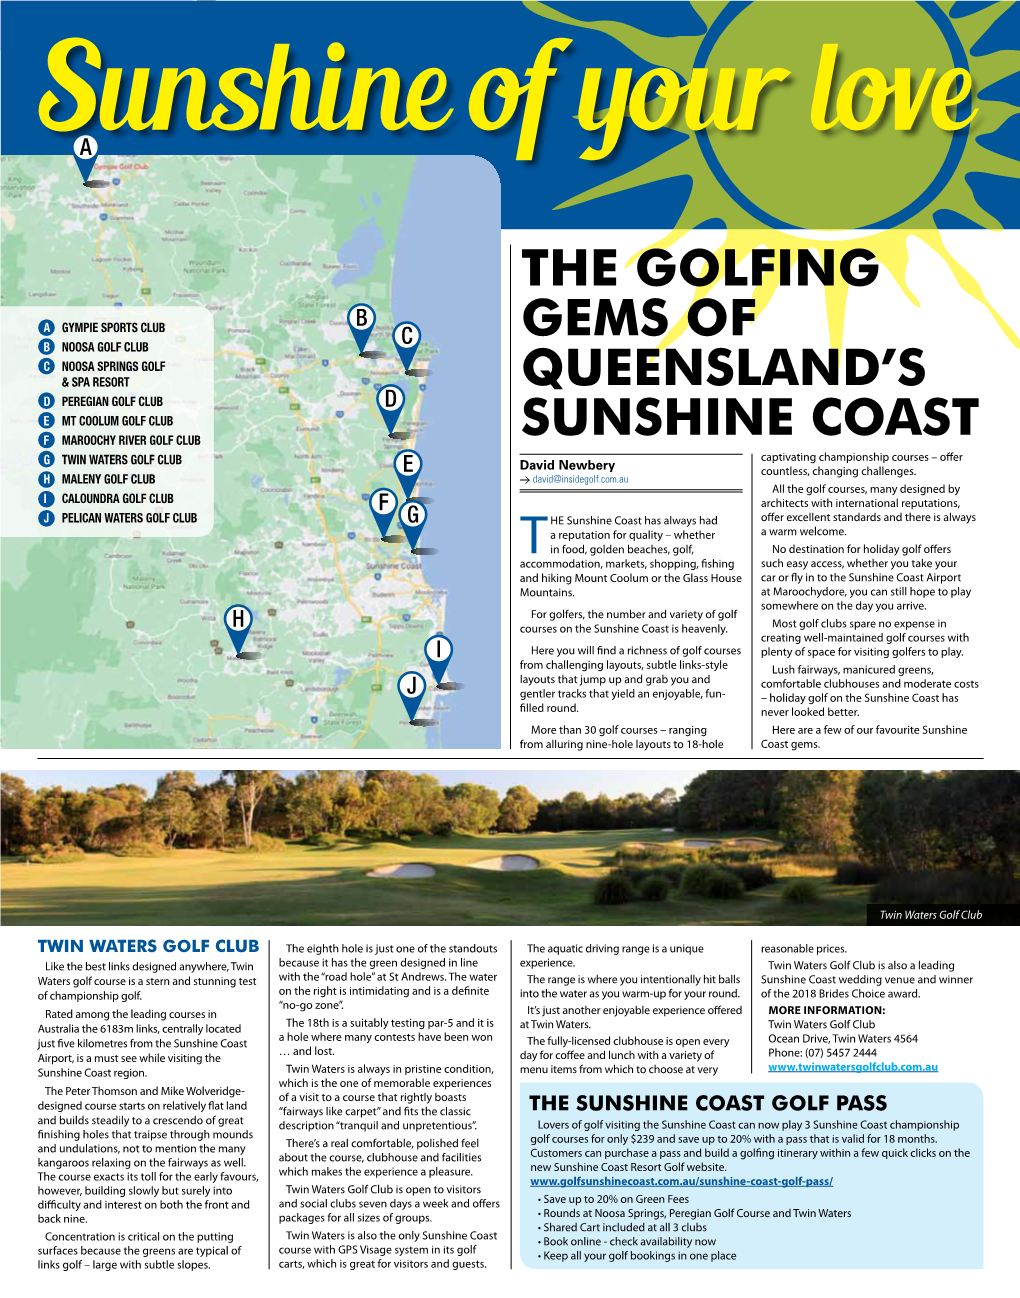 The Golfing Gems of Queenslandls Sunshine